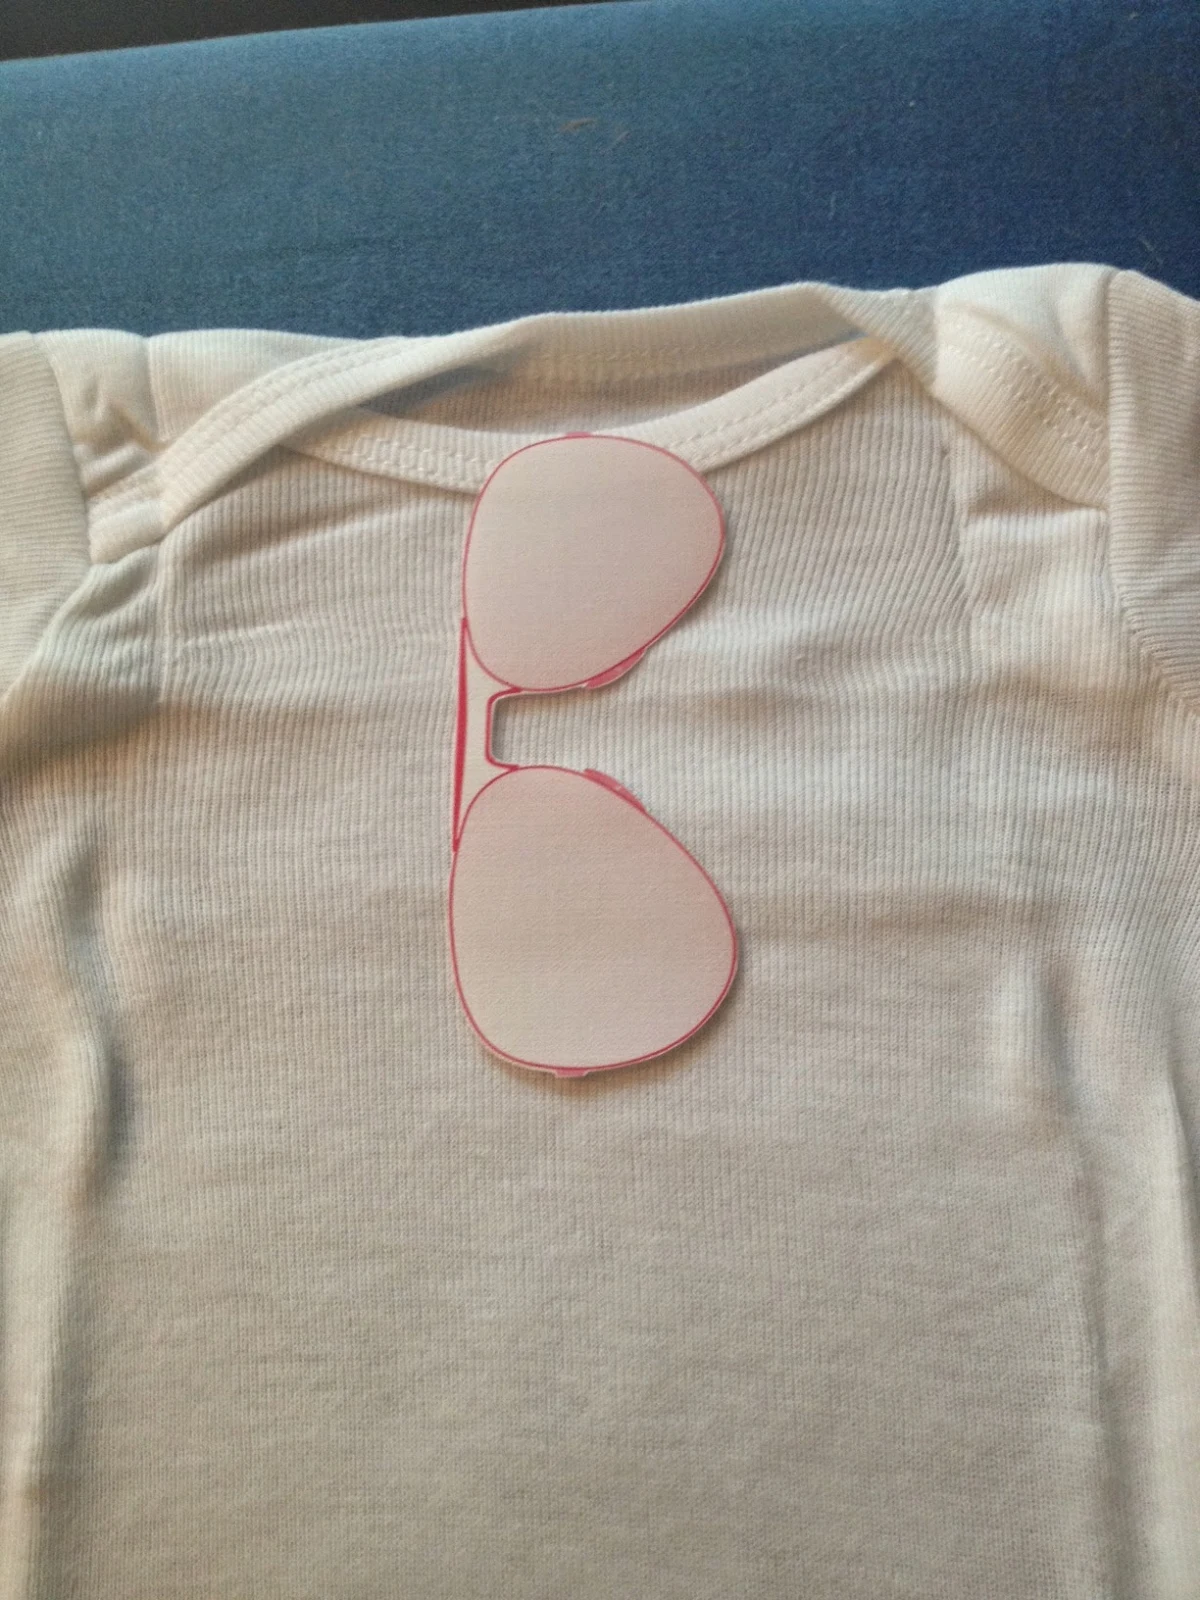 Silhouette, print and cut, heat transfer, iron on, Silhouette tutorial, sunglasses, onesie